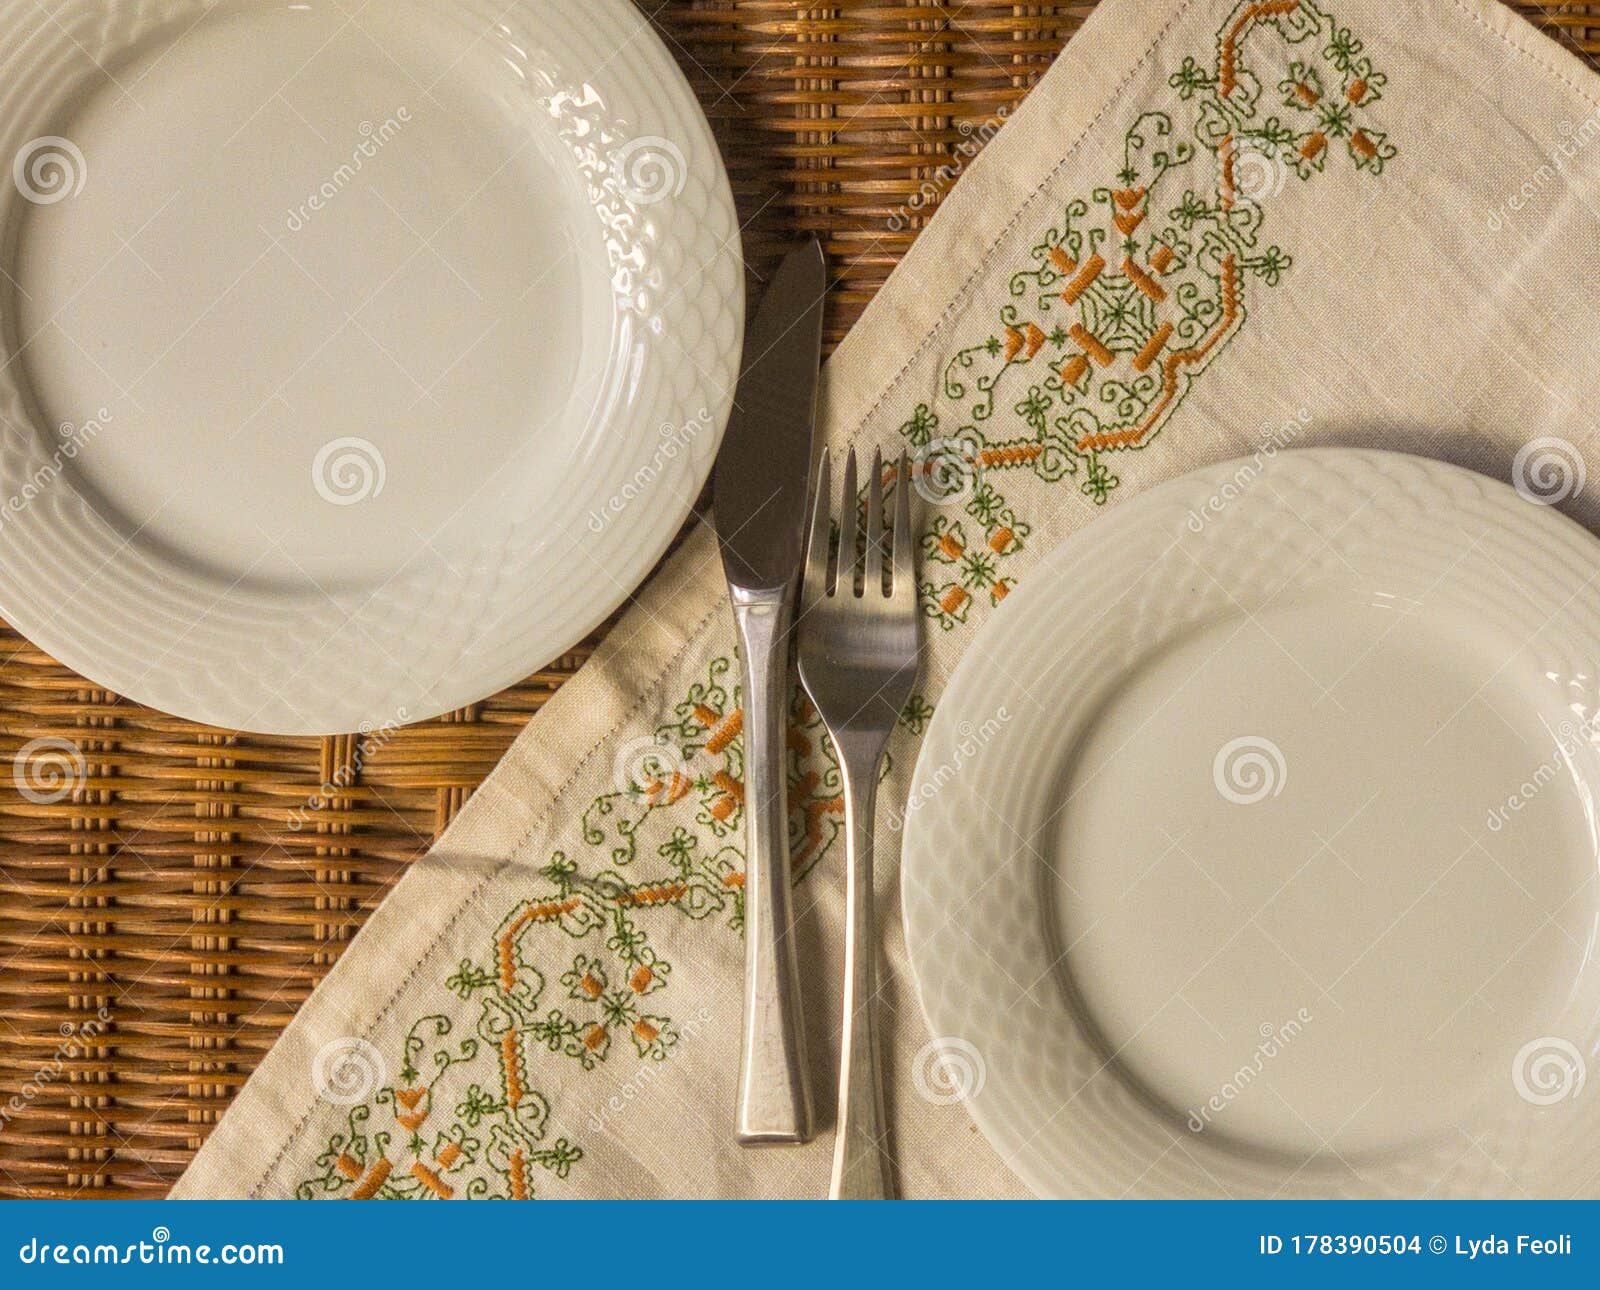 Tableware Setting for Food Presentation Stock Photo - Image of dish ...